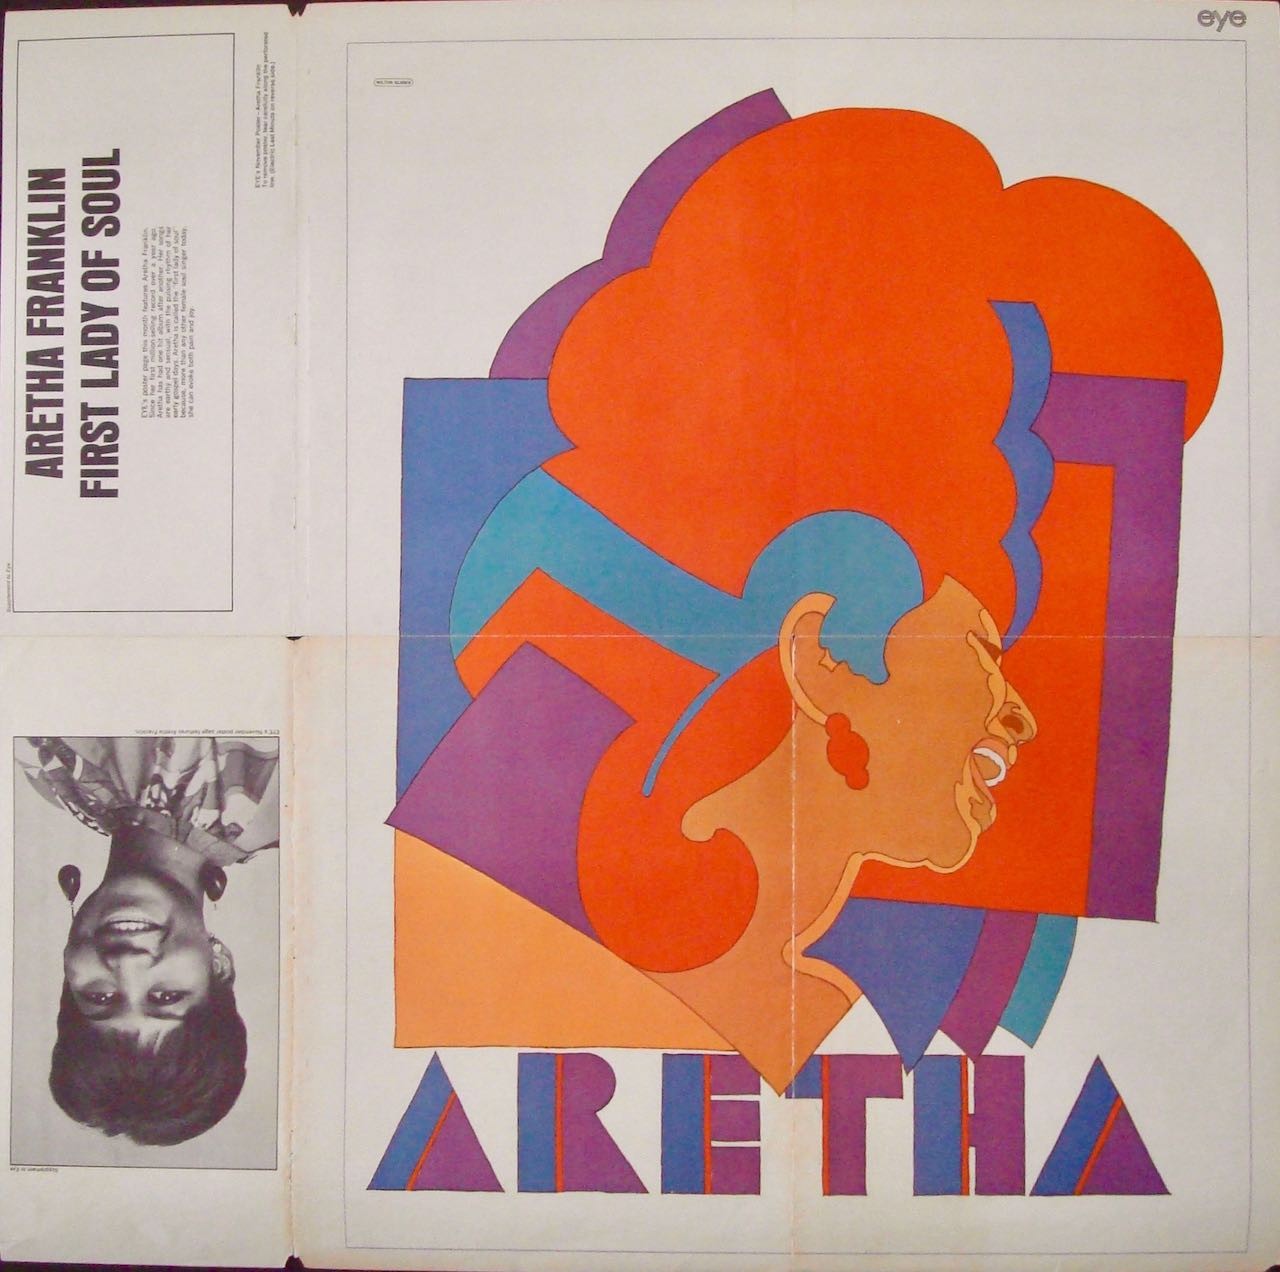 Aretha Franklin - Eye Magazine 1968